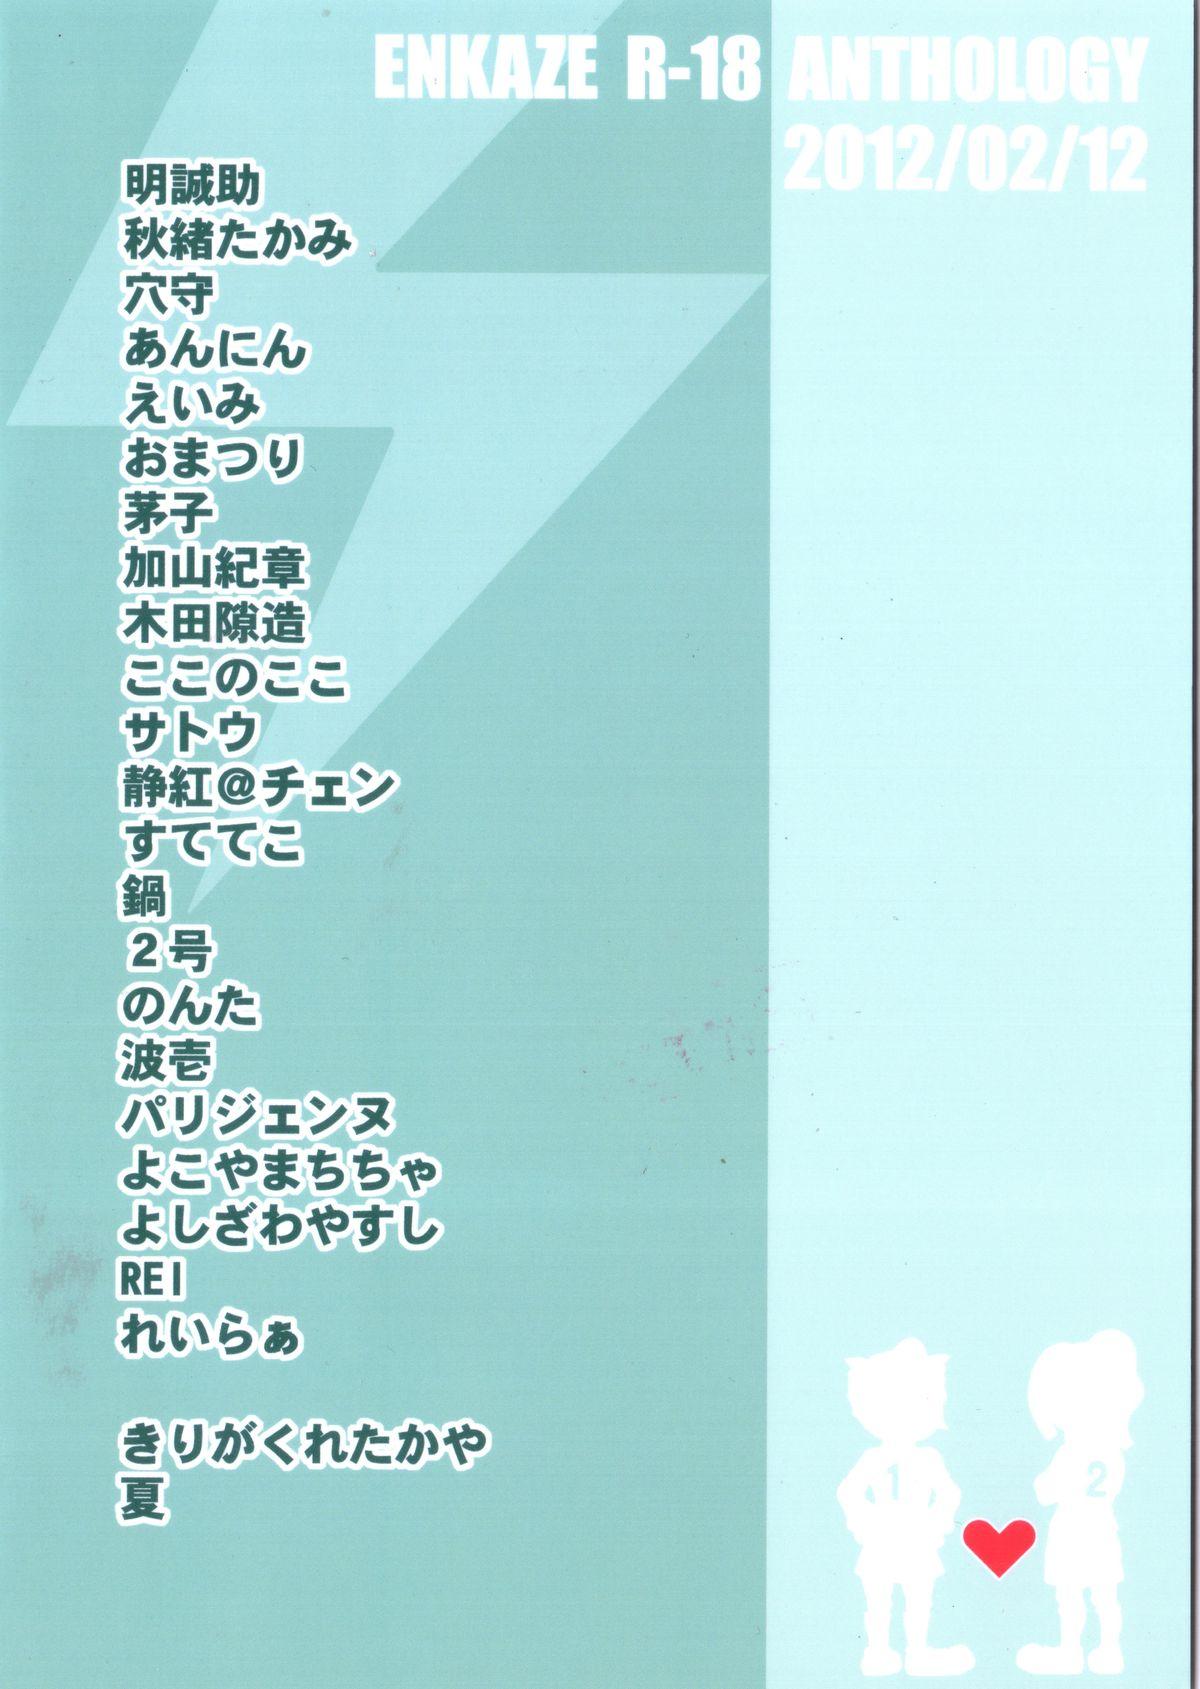 Bubblebutt Kirigakure Takaya (Aniki Otokodou) - ×××× Yarouze! (Inazuma Eleven) - Inazuma eleven Transgender - Page 2